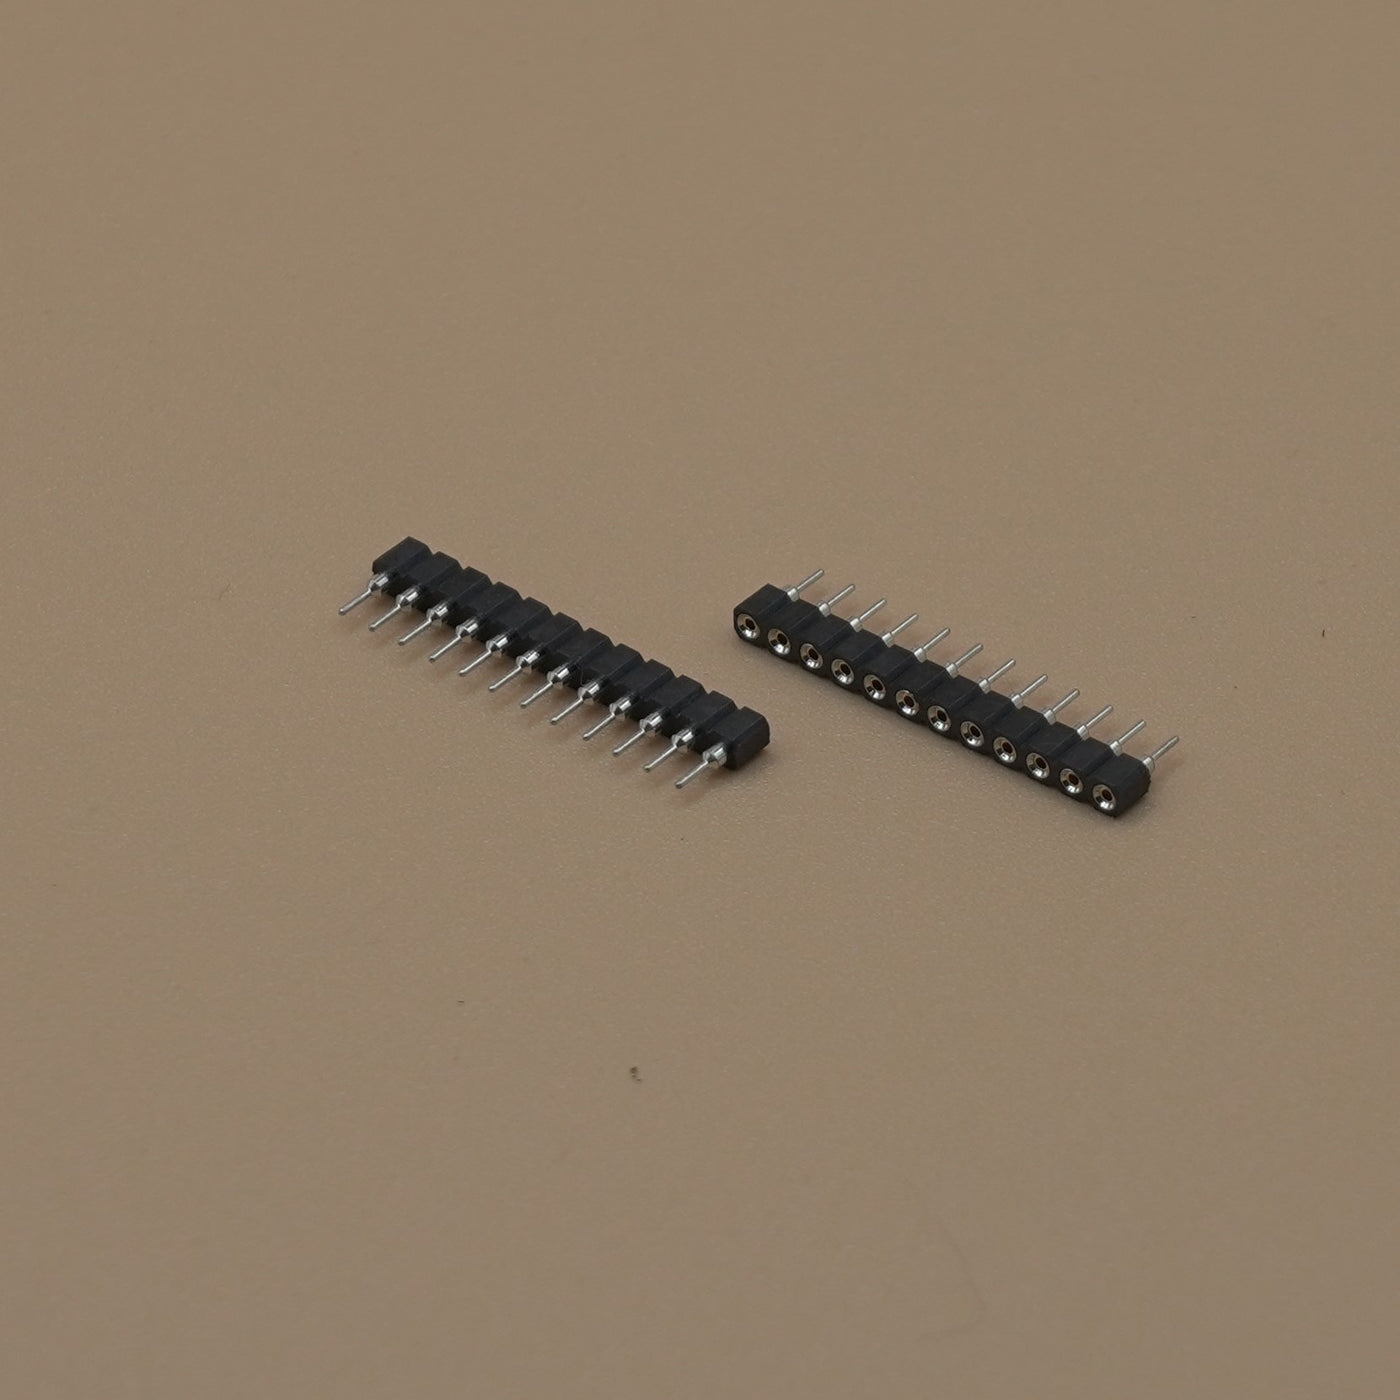 12x1 Female-Male Machined Pin Headers (Pair)